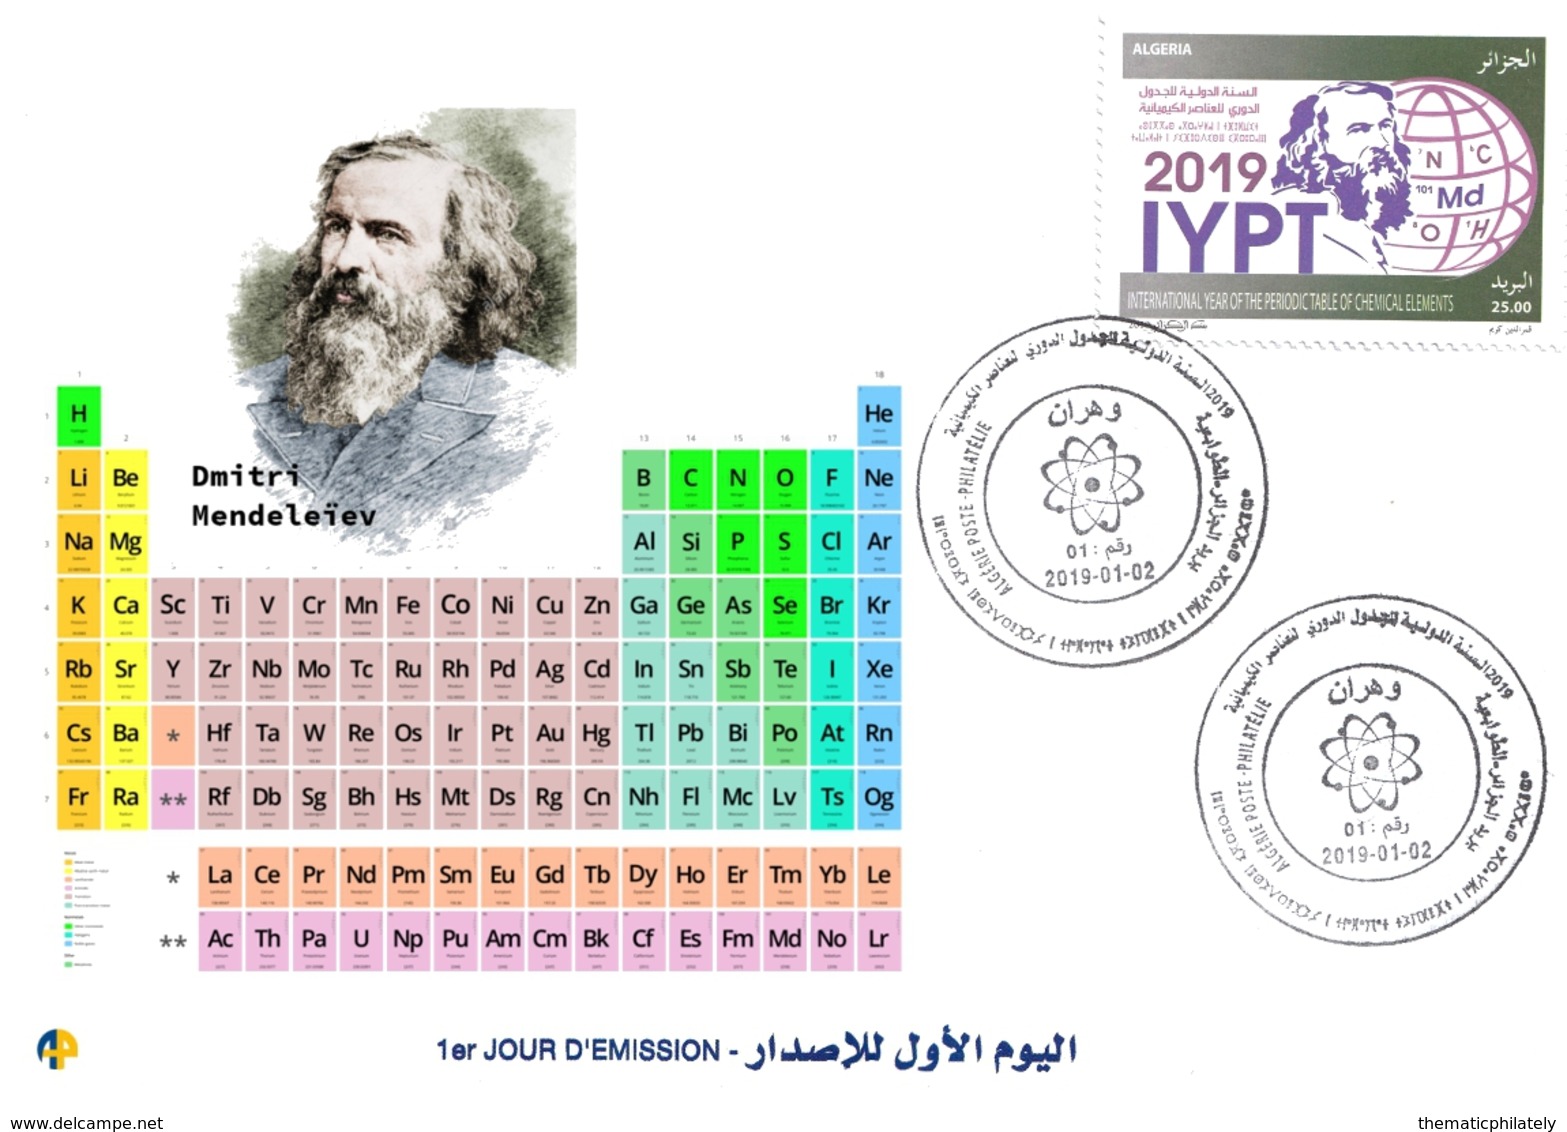 DZ Algeria 1836 - 2019 International Year Of The Periodic Table Of Chemical Elements Dmitry Mendeleev Chemistry - Chemistry